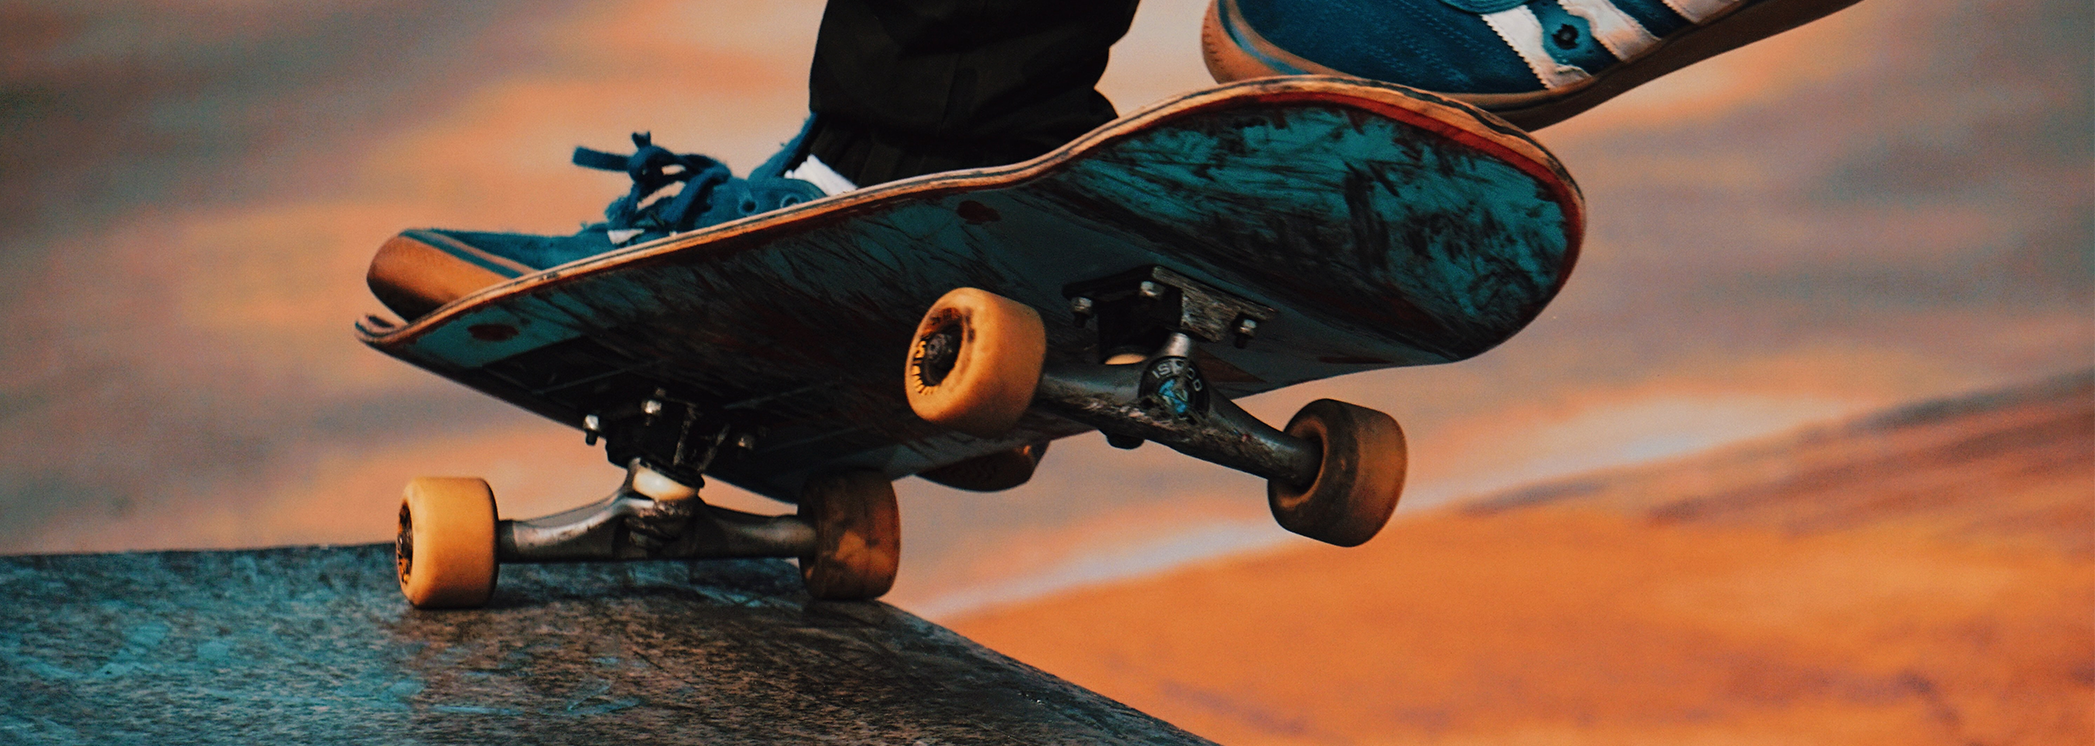 Street Skateboards